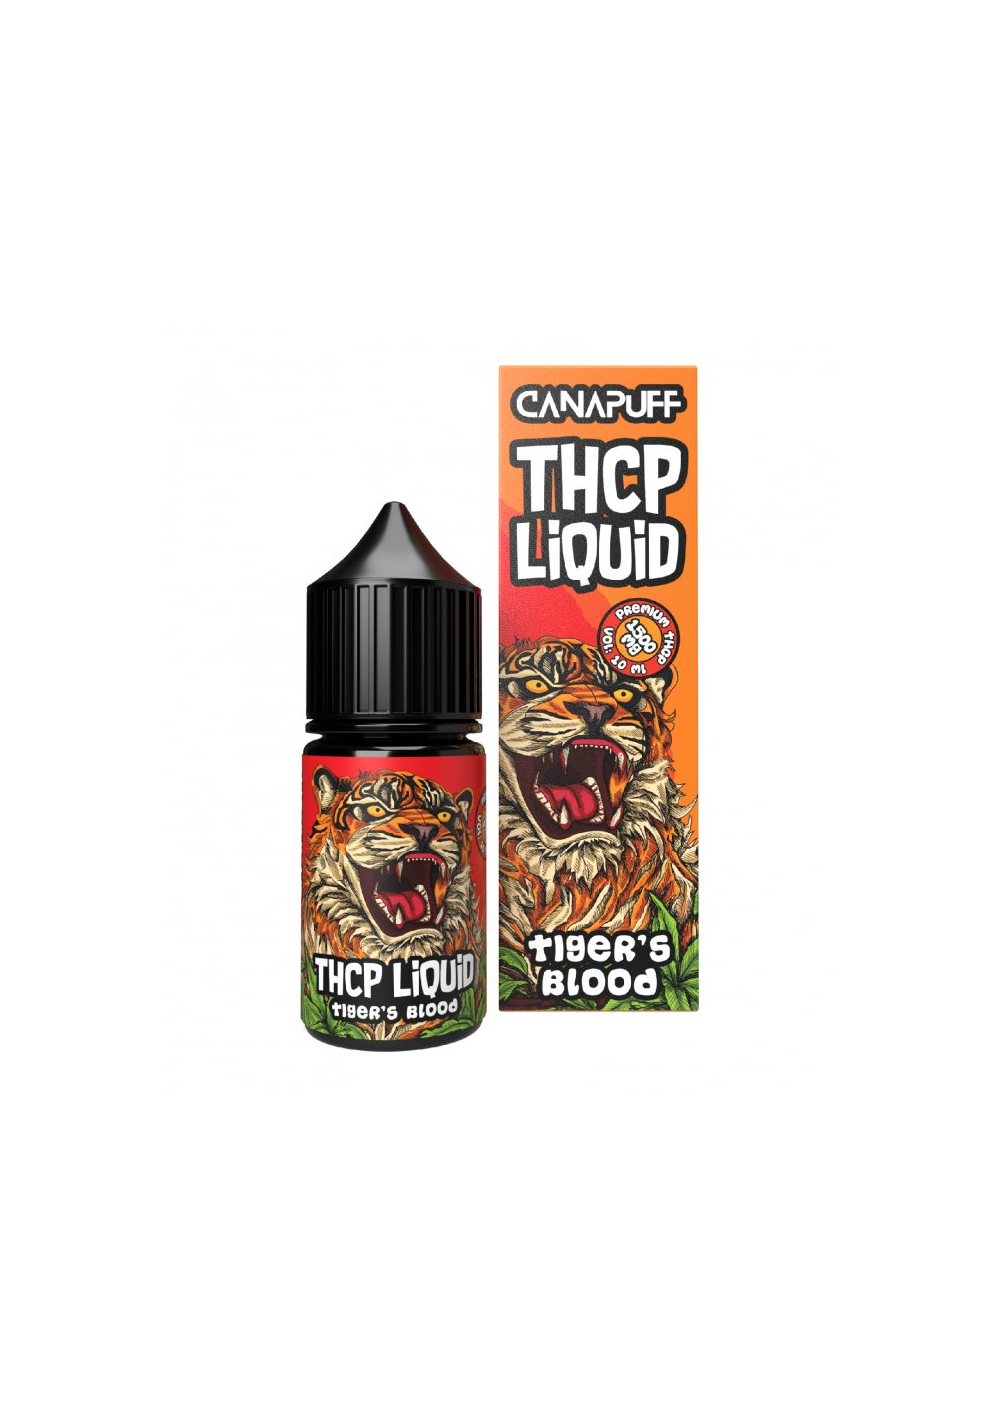 THC-P E-Liquid 79% - Tiger's Blood, 10ml - 1500mg THCp - Canapuff